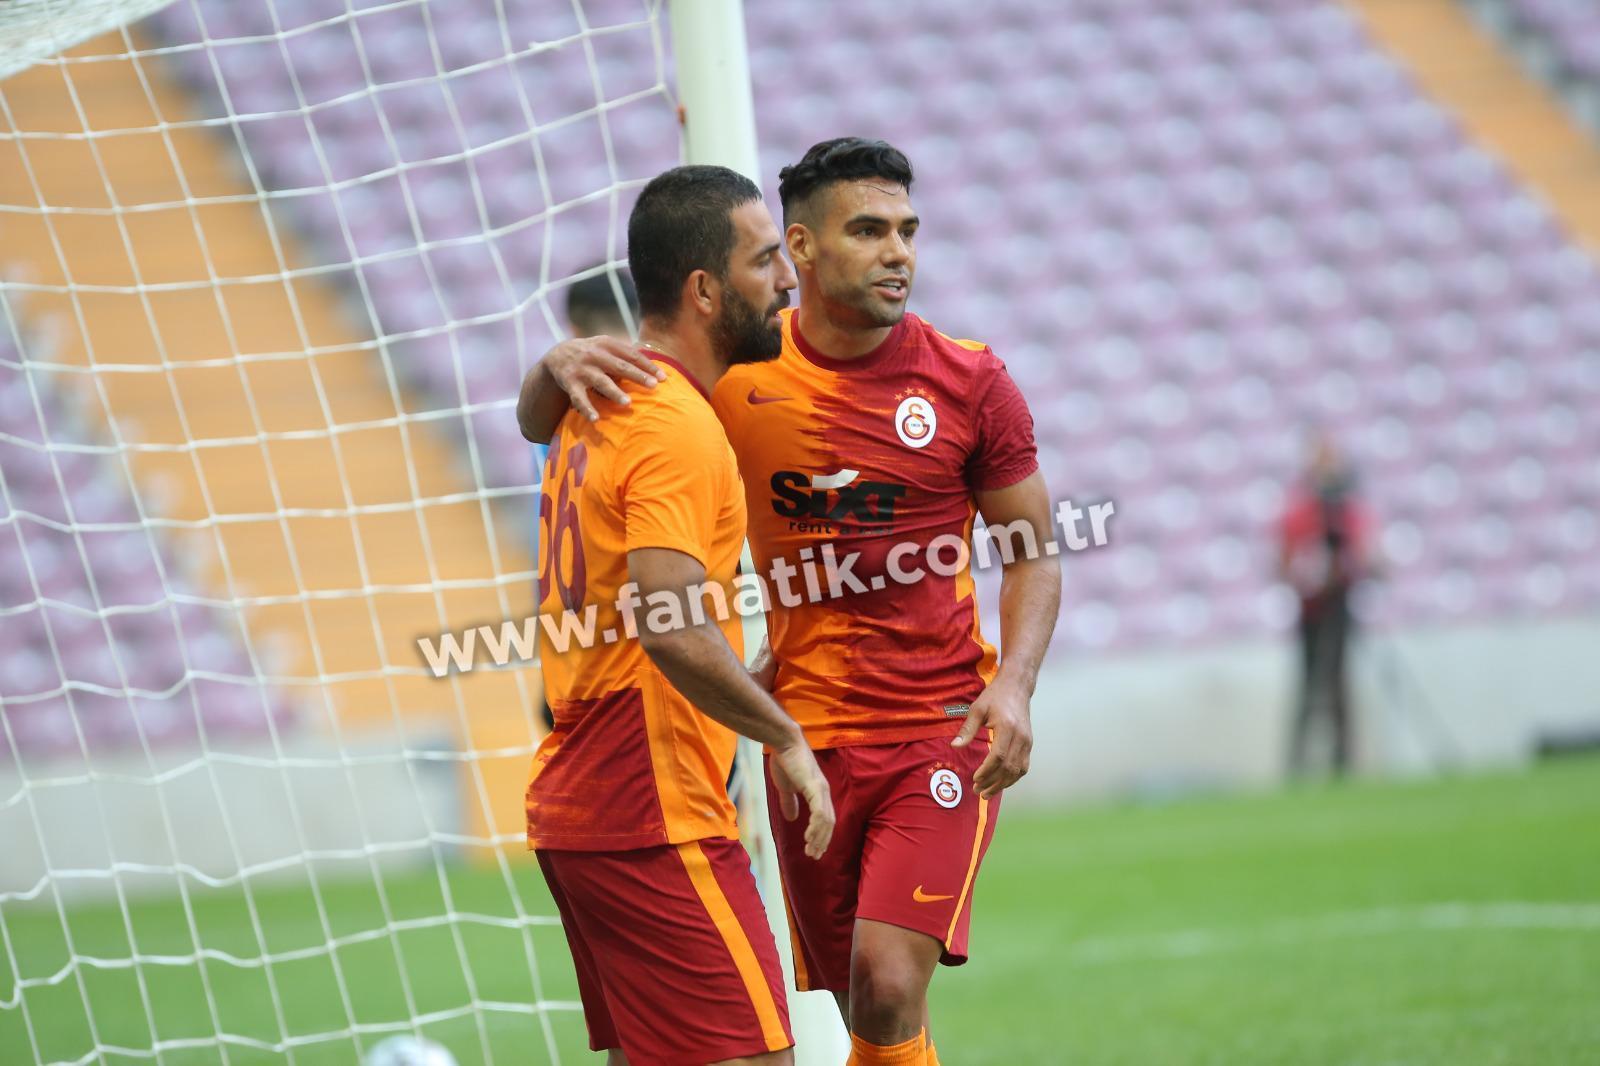 Galatasaray - Hatayspor maç sonucu: 1-1